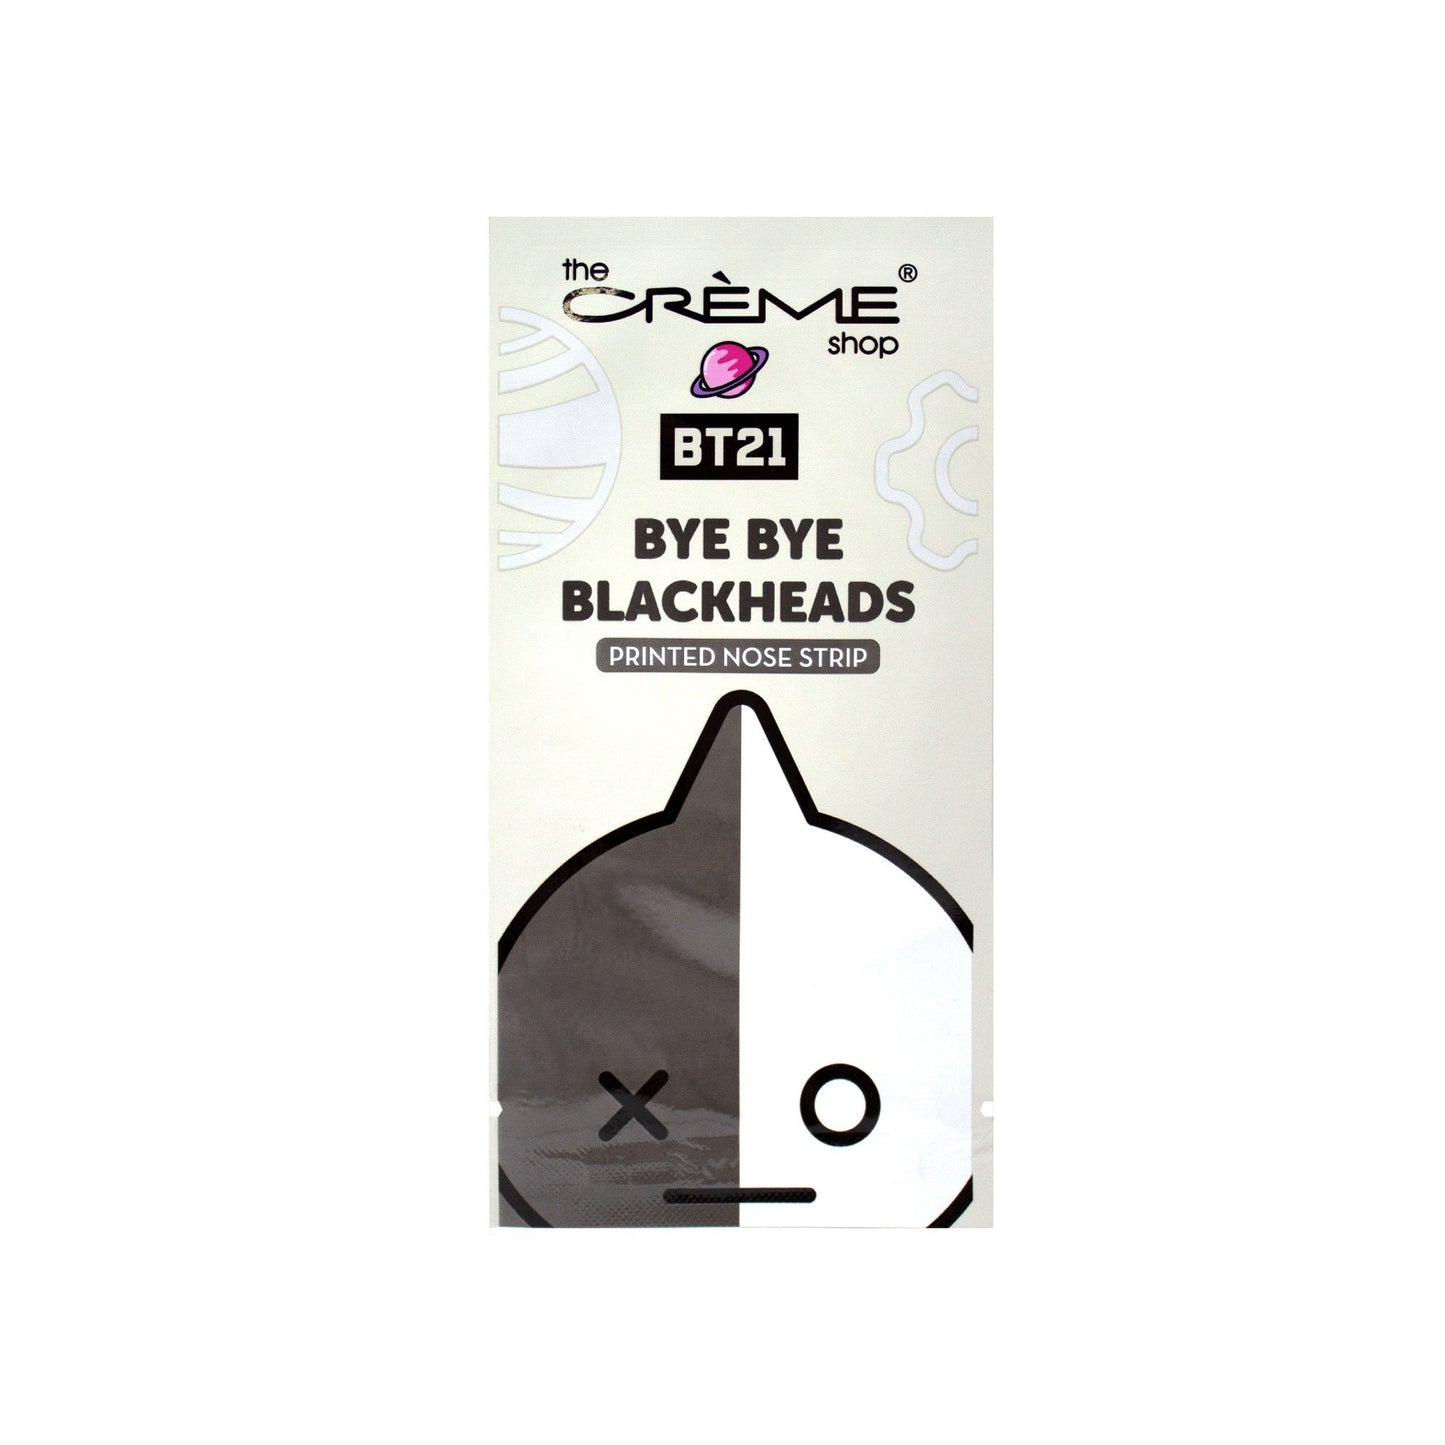 The Crème Shop | BT21: Bye Bye Blackheads - Printed Nose Strips (Set of 8) Blackheads Removers The Crème Shop x BT21 